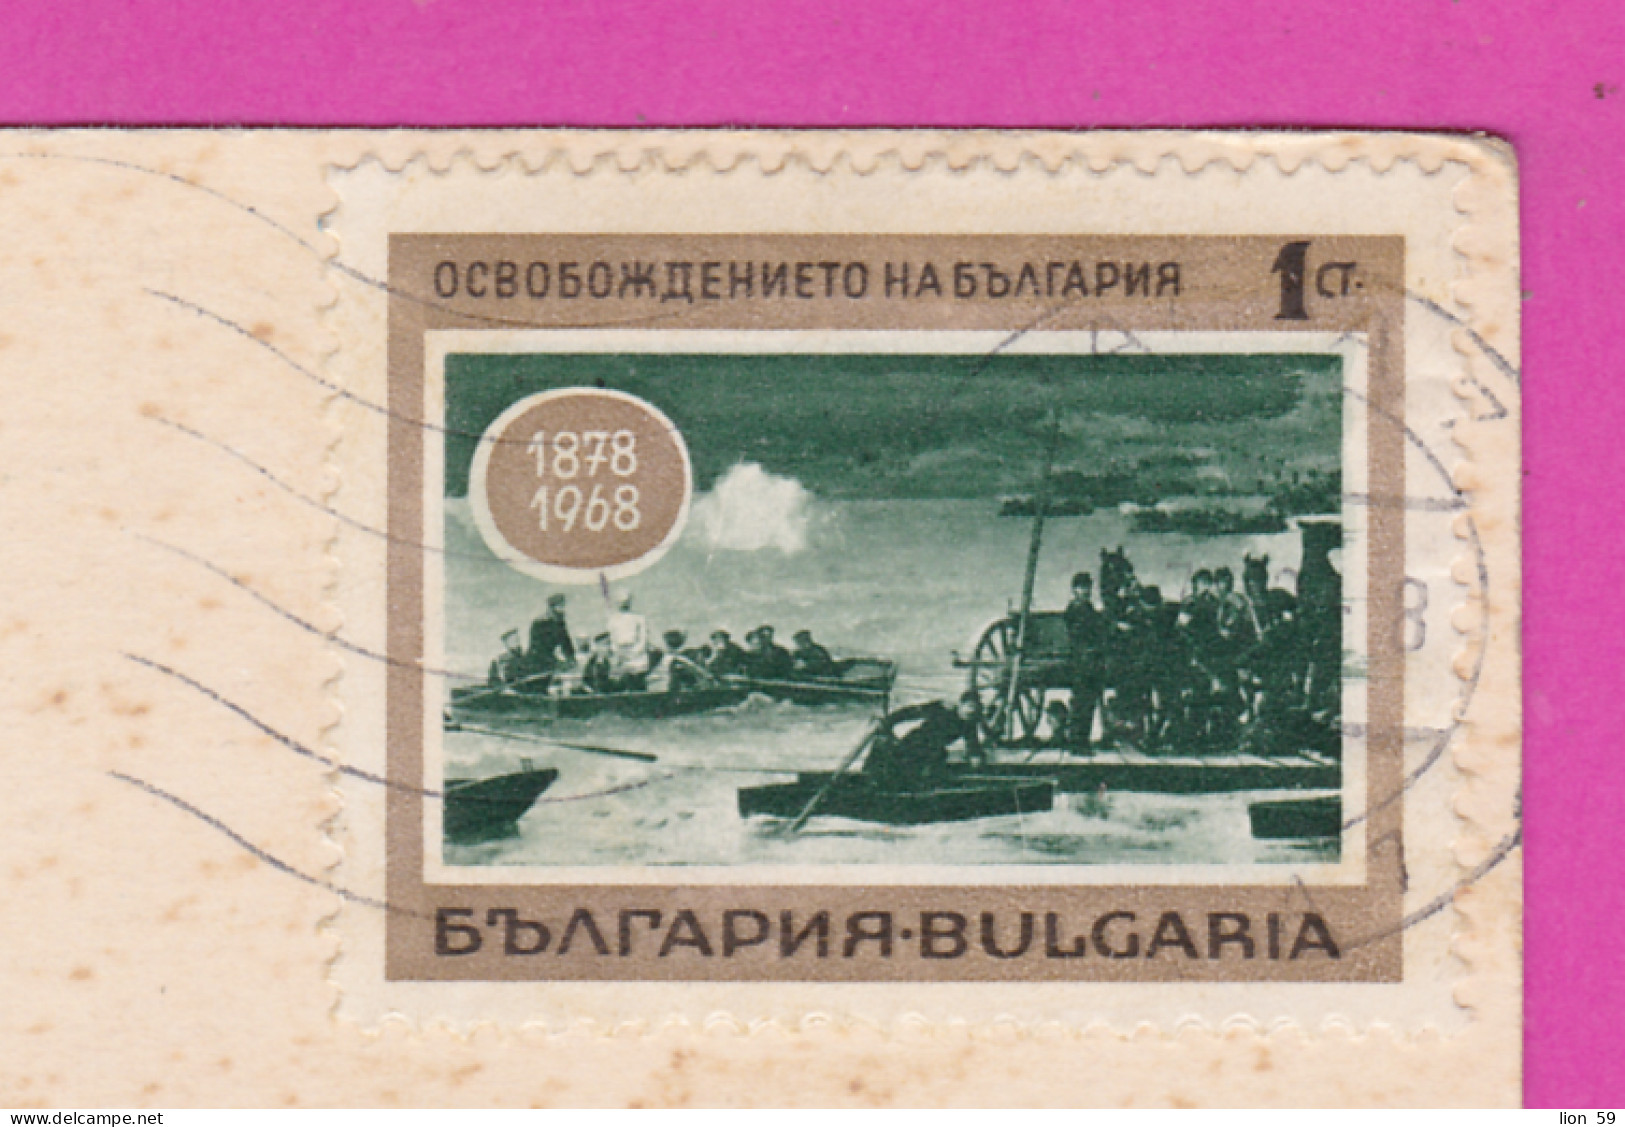 309651 / Bulgaria - Golden Sands (Varna) PC 1968 USED 1St Crossing Of The Russian Troops Across The Danube Near Svishtov - Briefe U. Dokumente